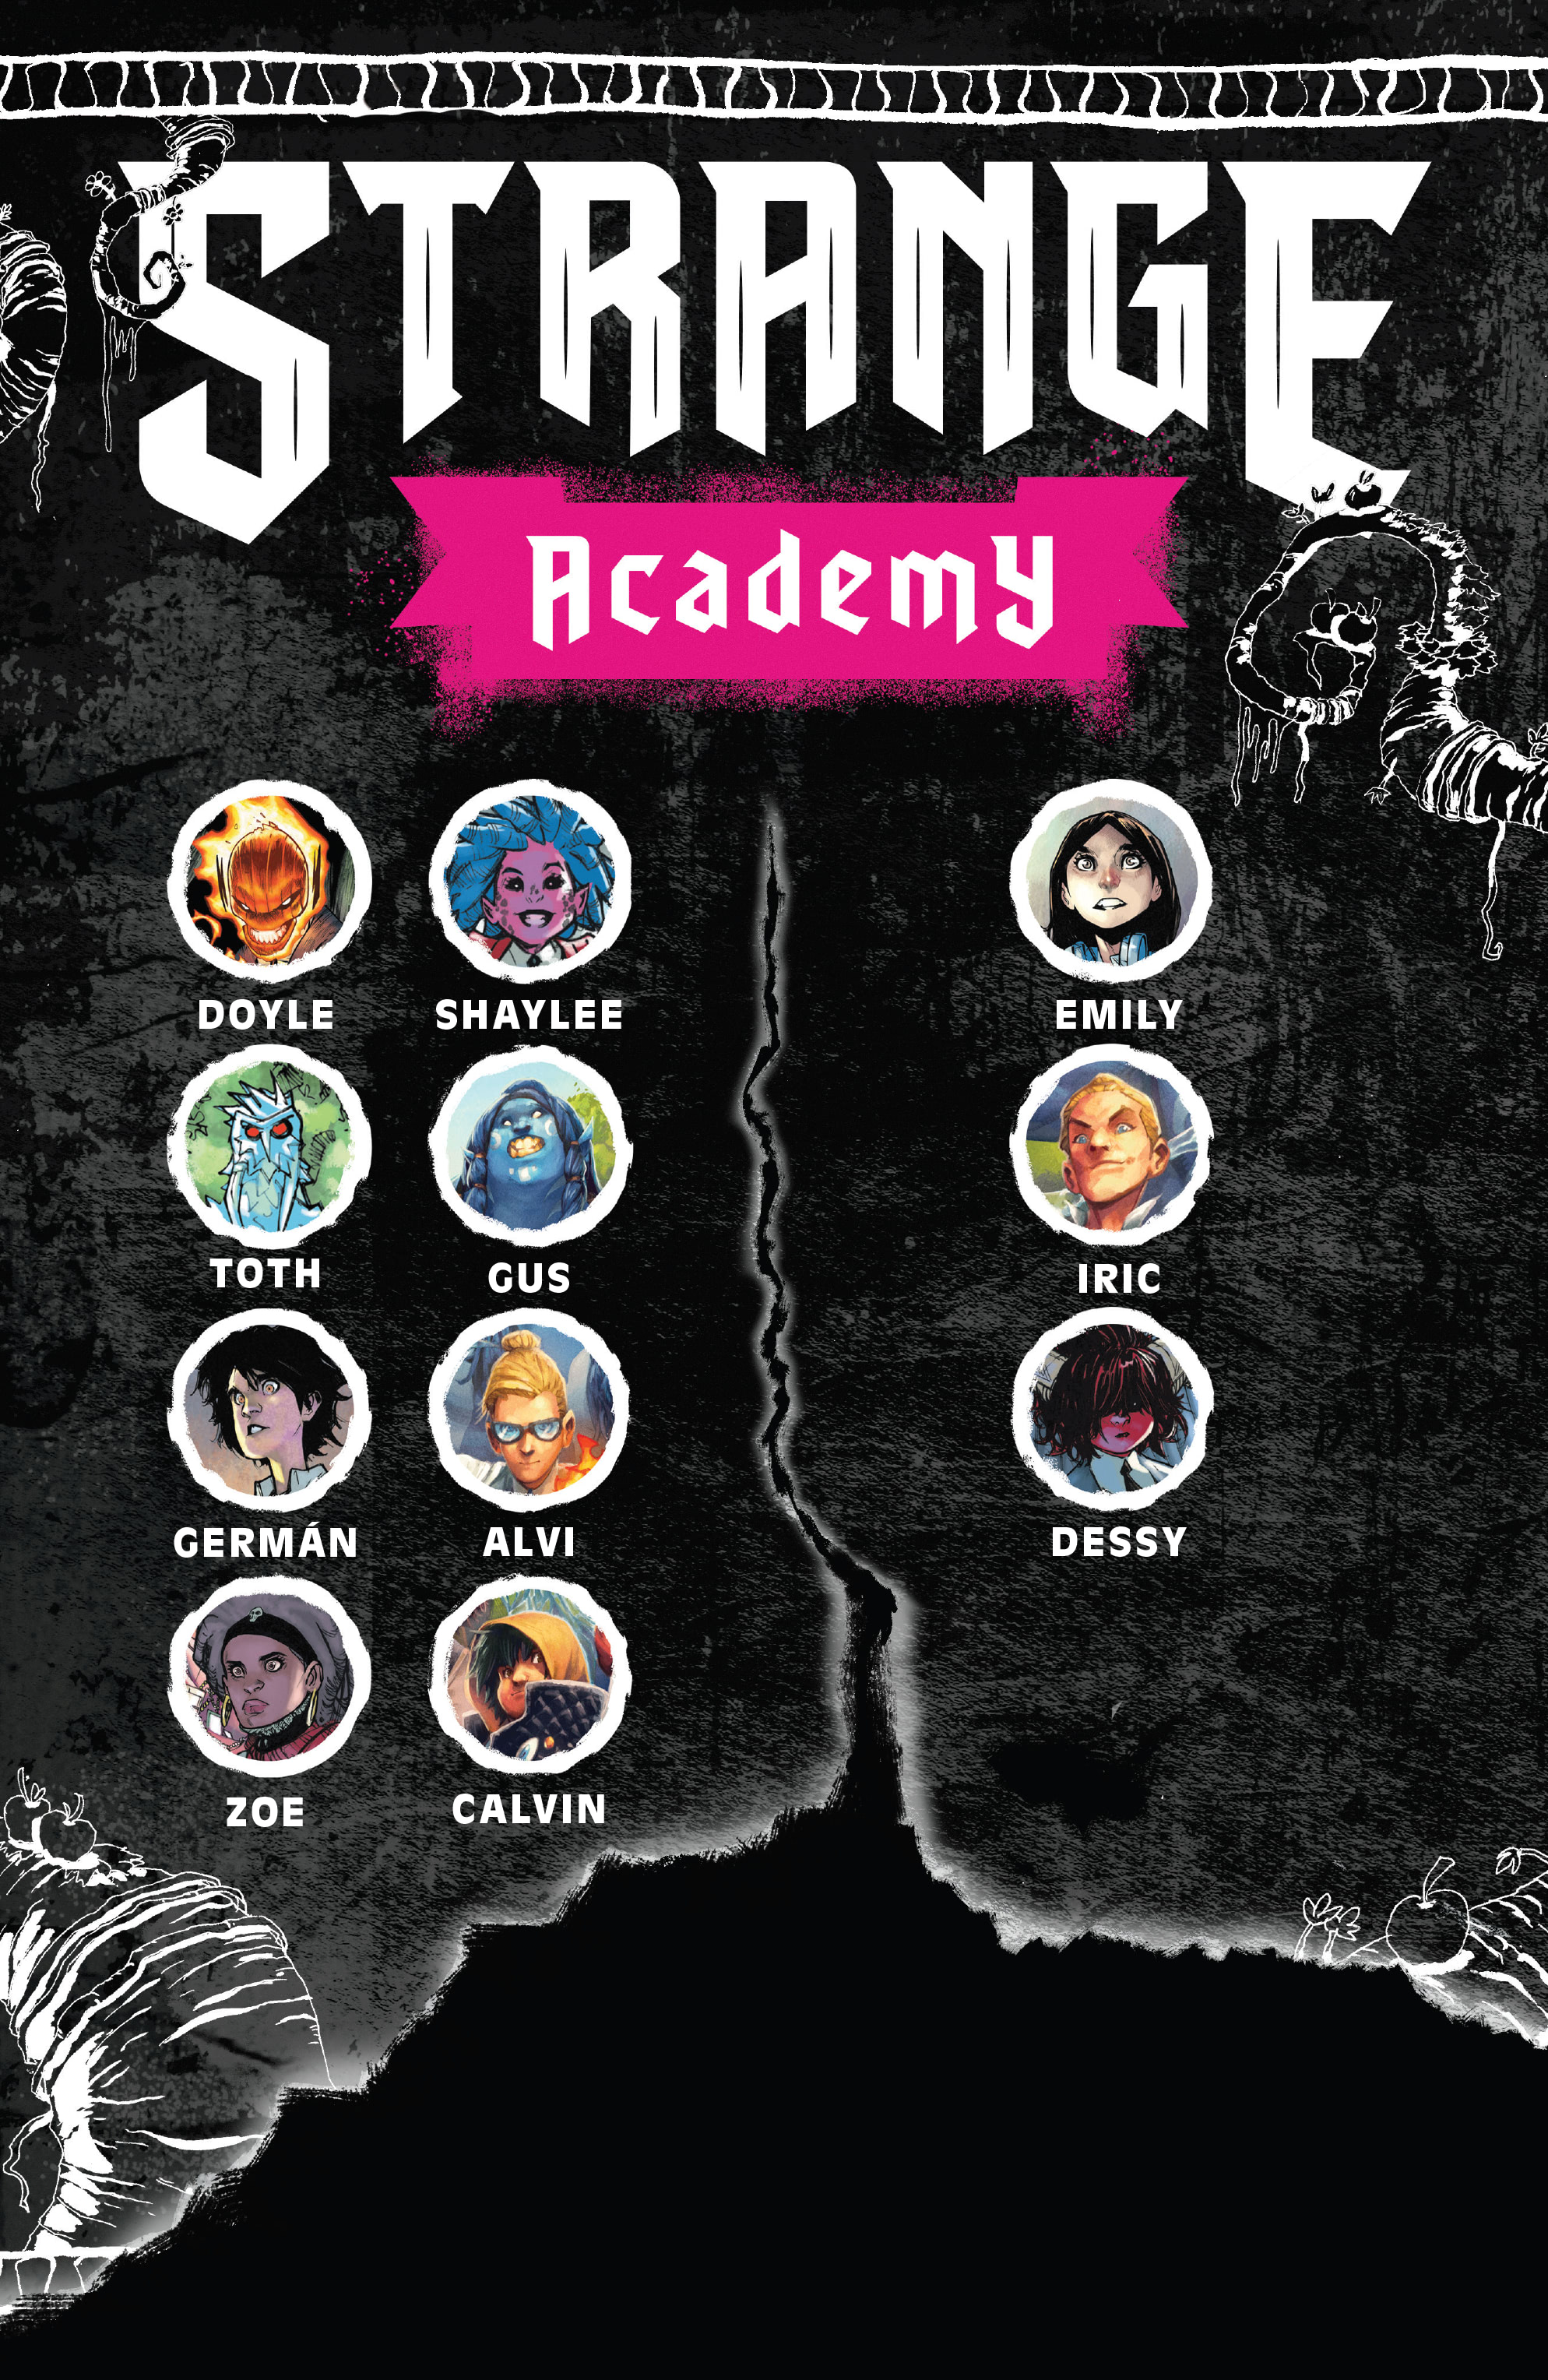 Read online Strange Academy: Finals comic -  Issue #3 - 4